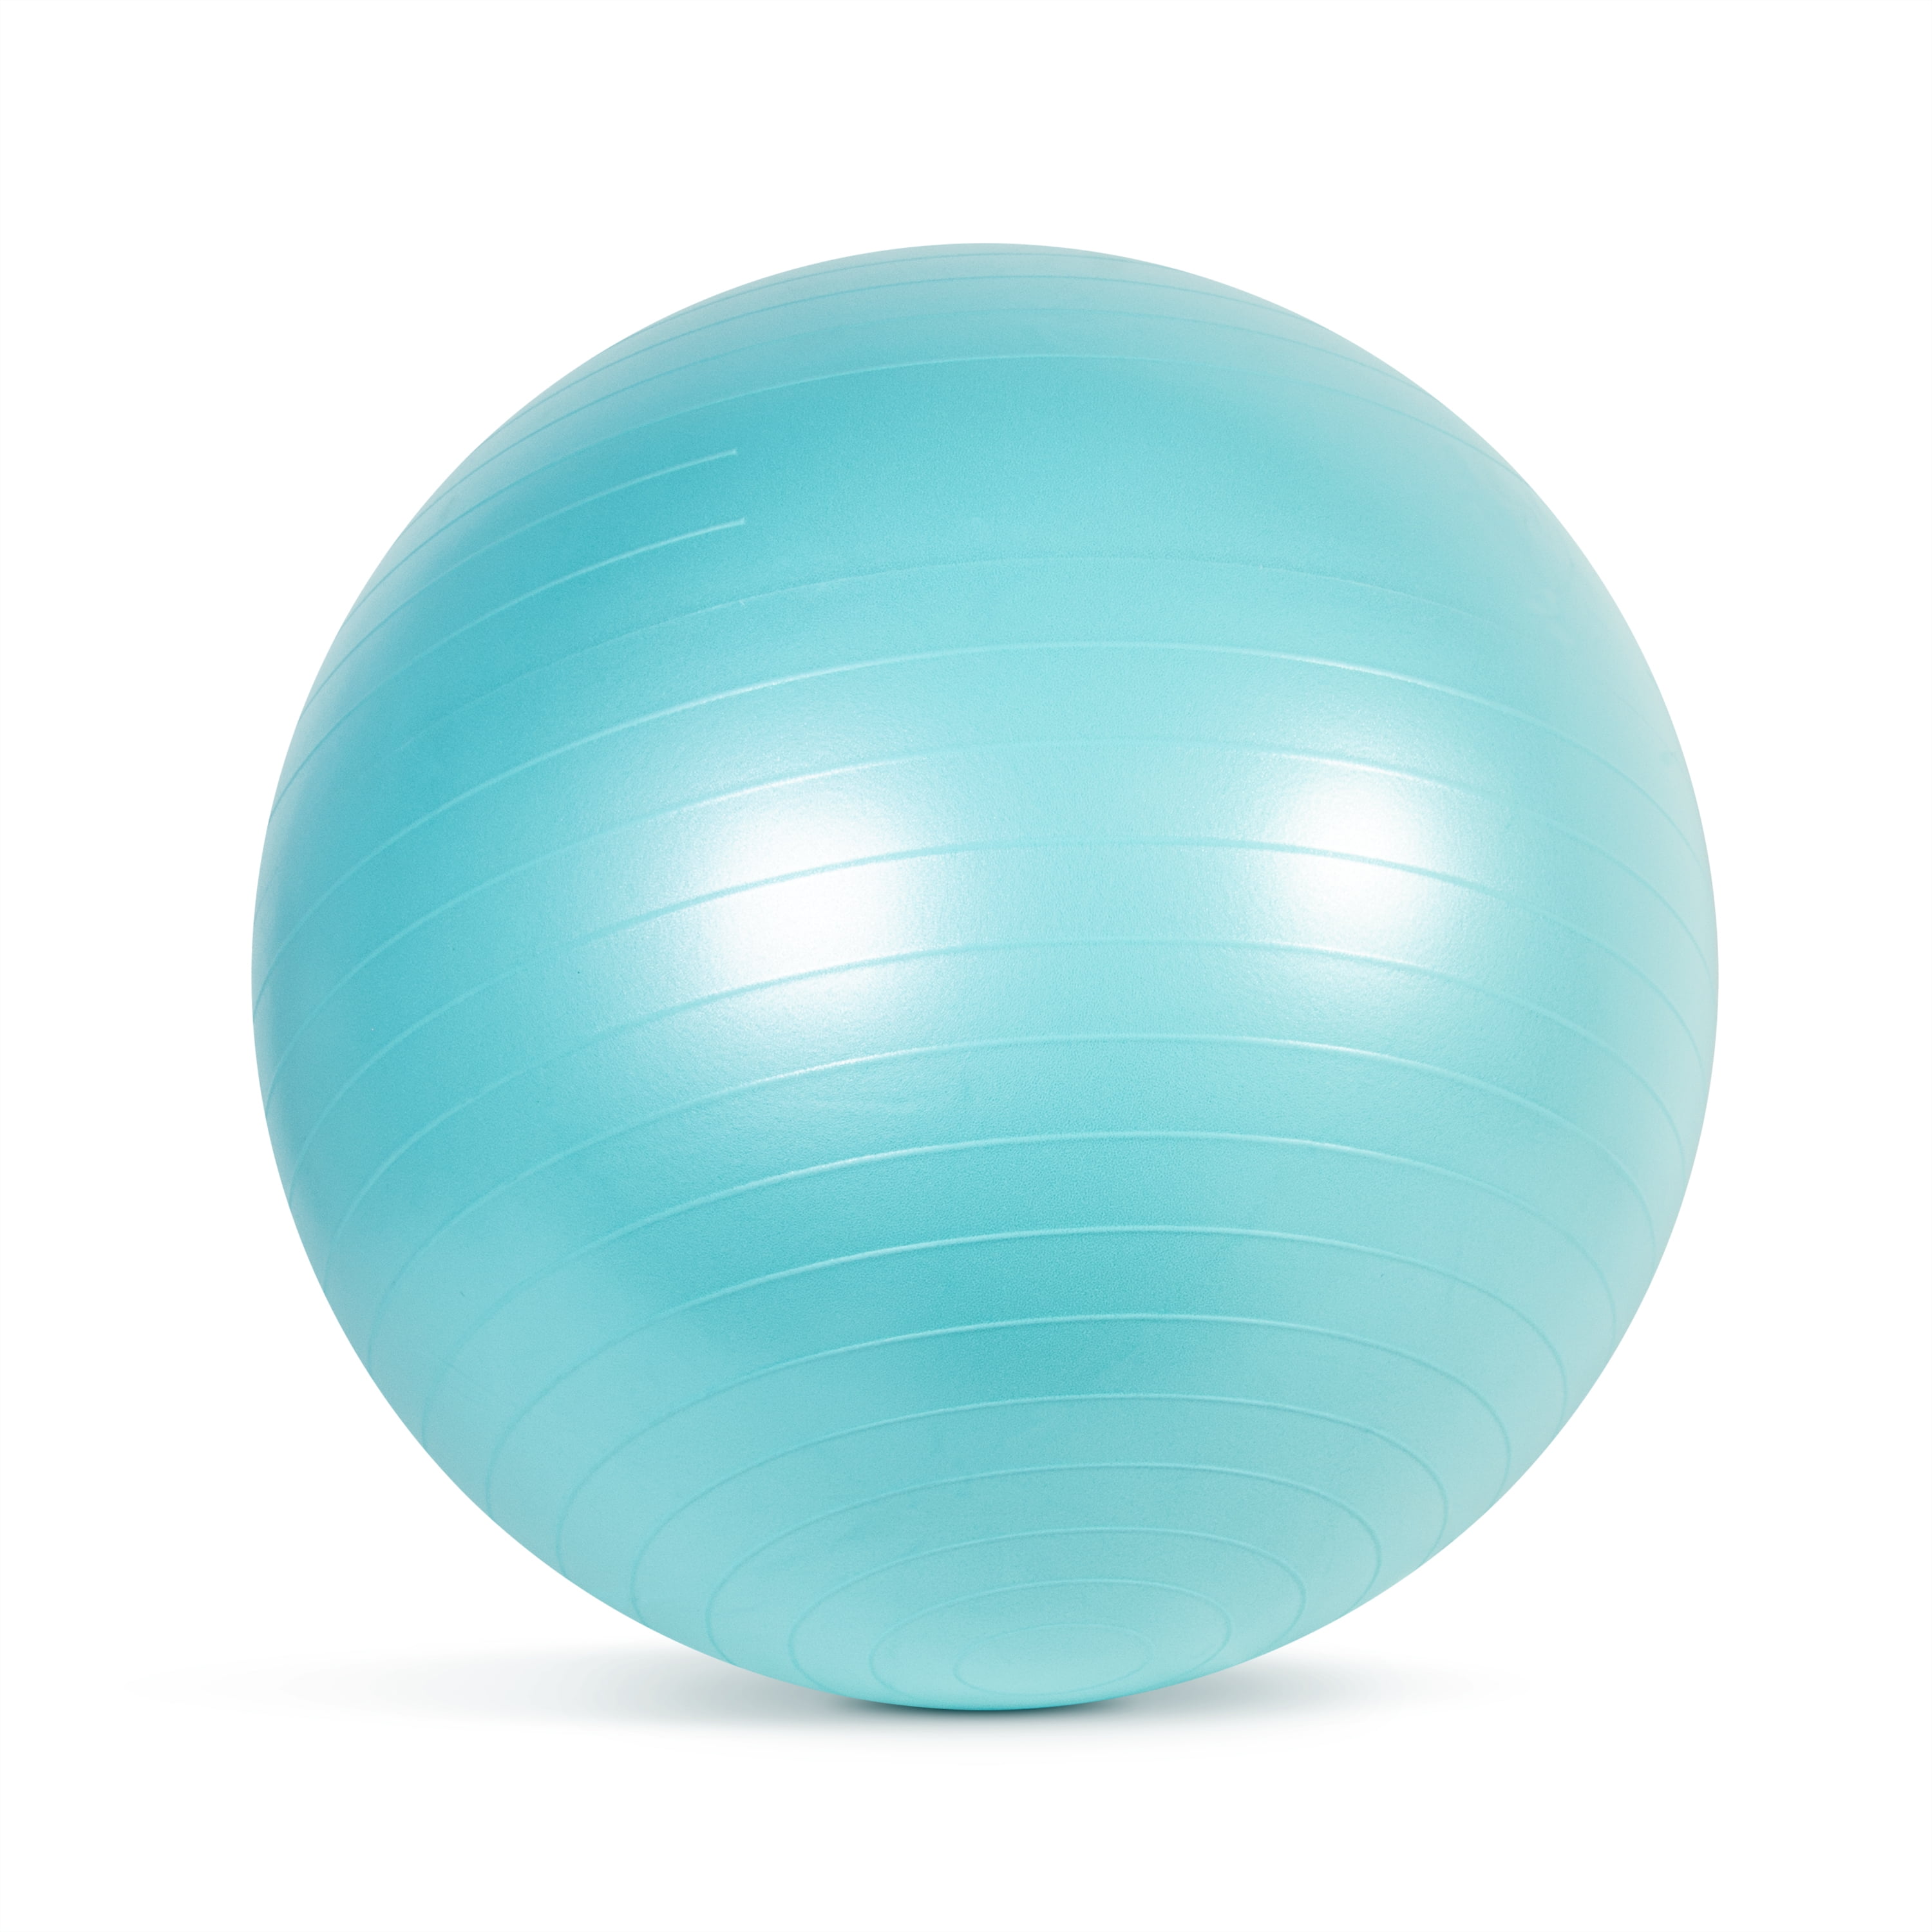 25cm Mini Yoga Ball Fitness Exercise Stability Balance Trainer Pilates LA 